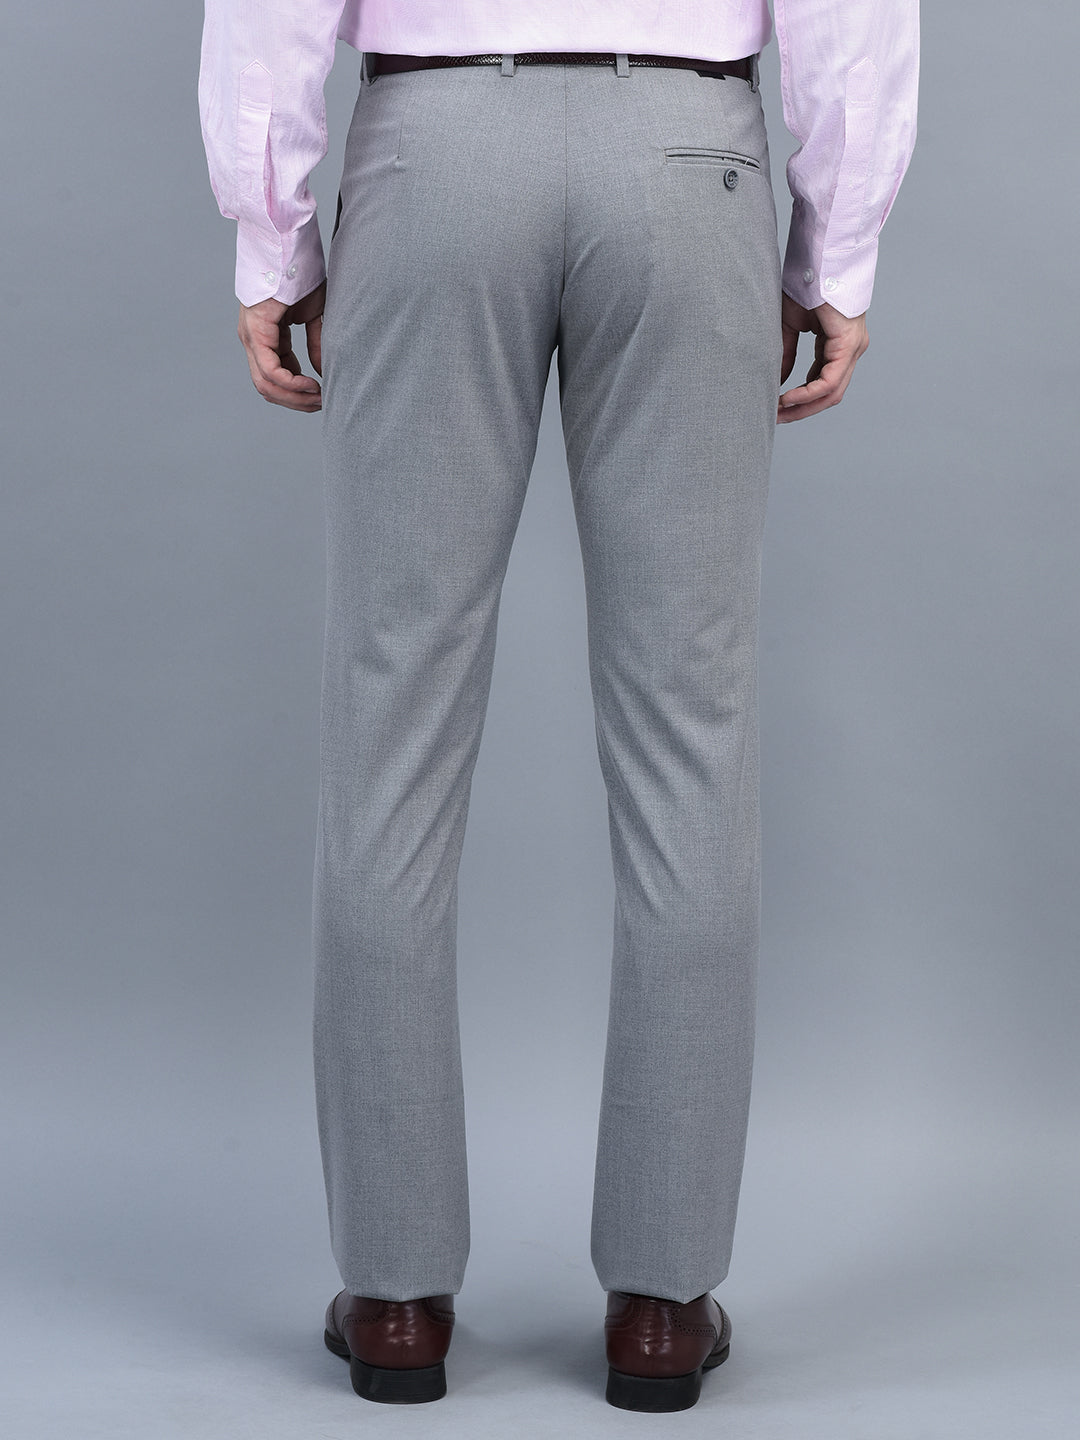 Buy Light Grey Trouser for Female Online  Best Prices in India  UNIFORM  BUCKET